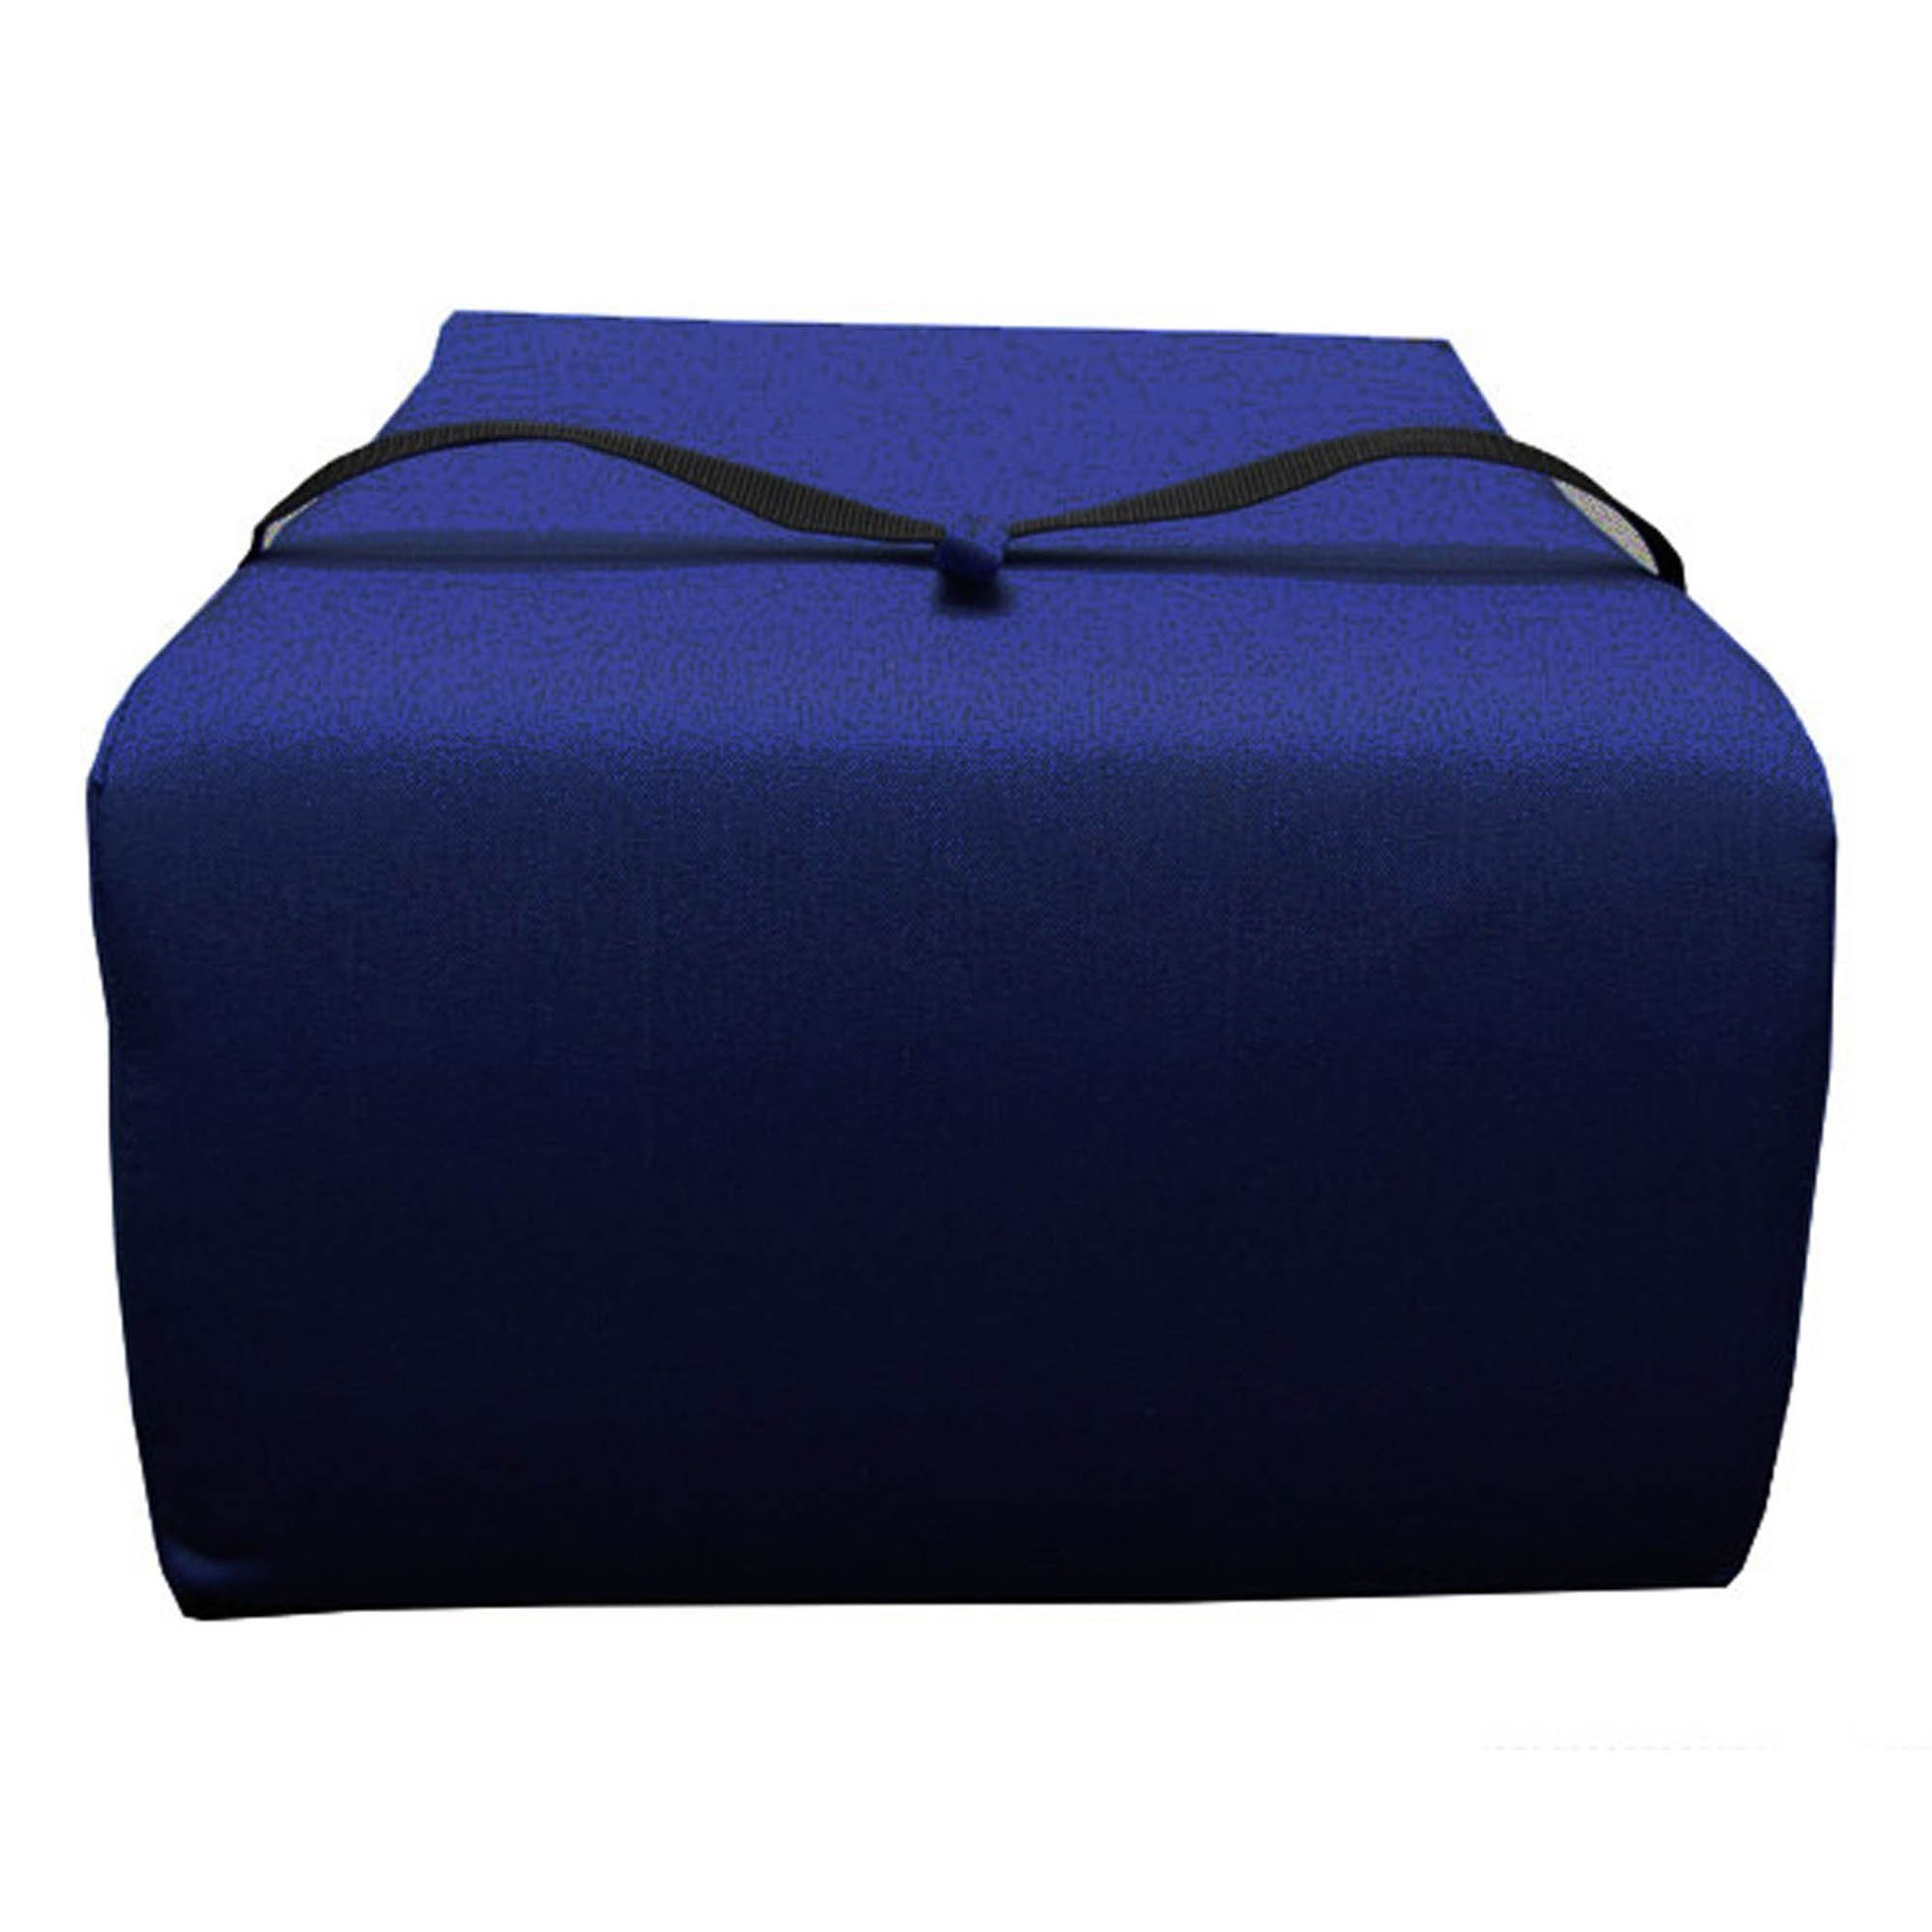 Body Side Wedge Pillow with Zipper Blue Cotton Incline Side Wedge Pillow  Personalized Blue for Adults Side Sleeper - AliExpress